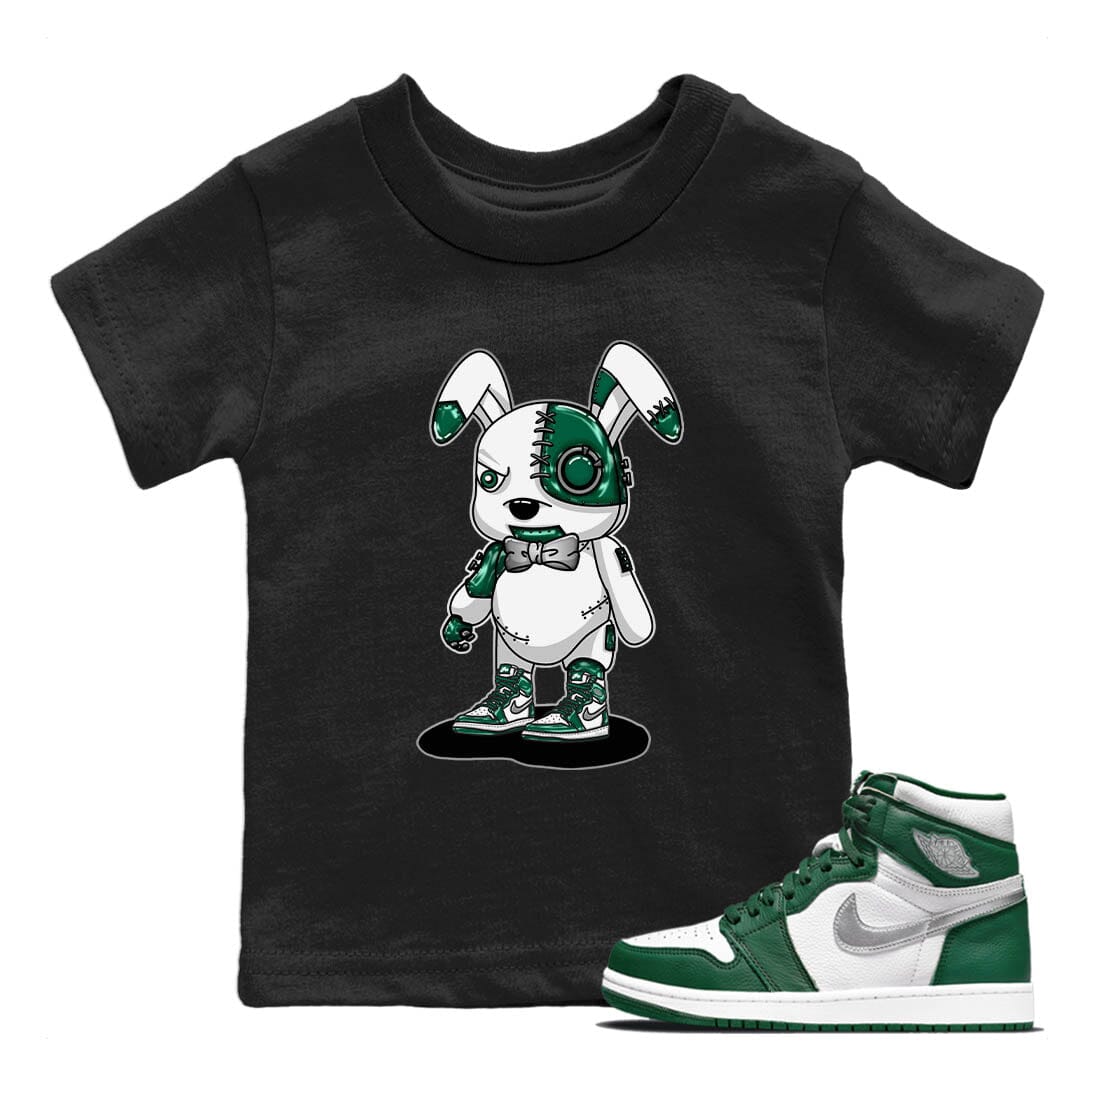 Jordan 1 Gorge Green Sneaker Match Tees Cyborg Bunny Sneaker Tees Jordan 1 Gorge Green Sneaker Release Tees Kids Shirts